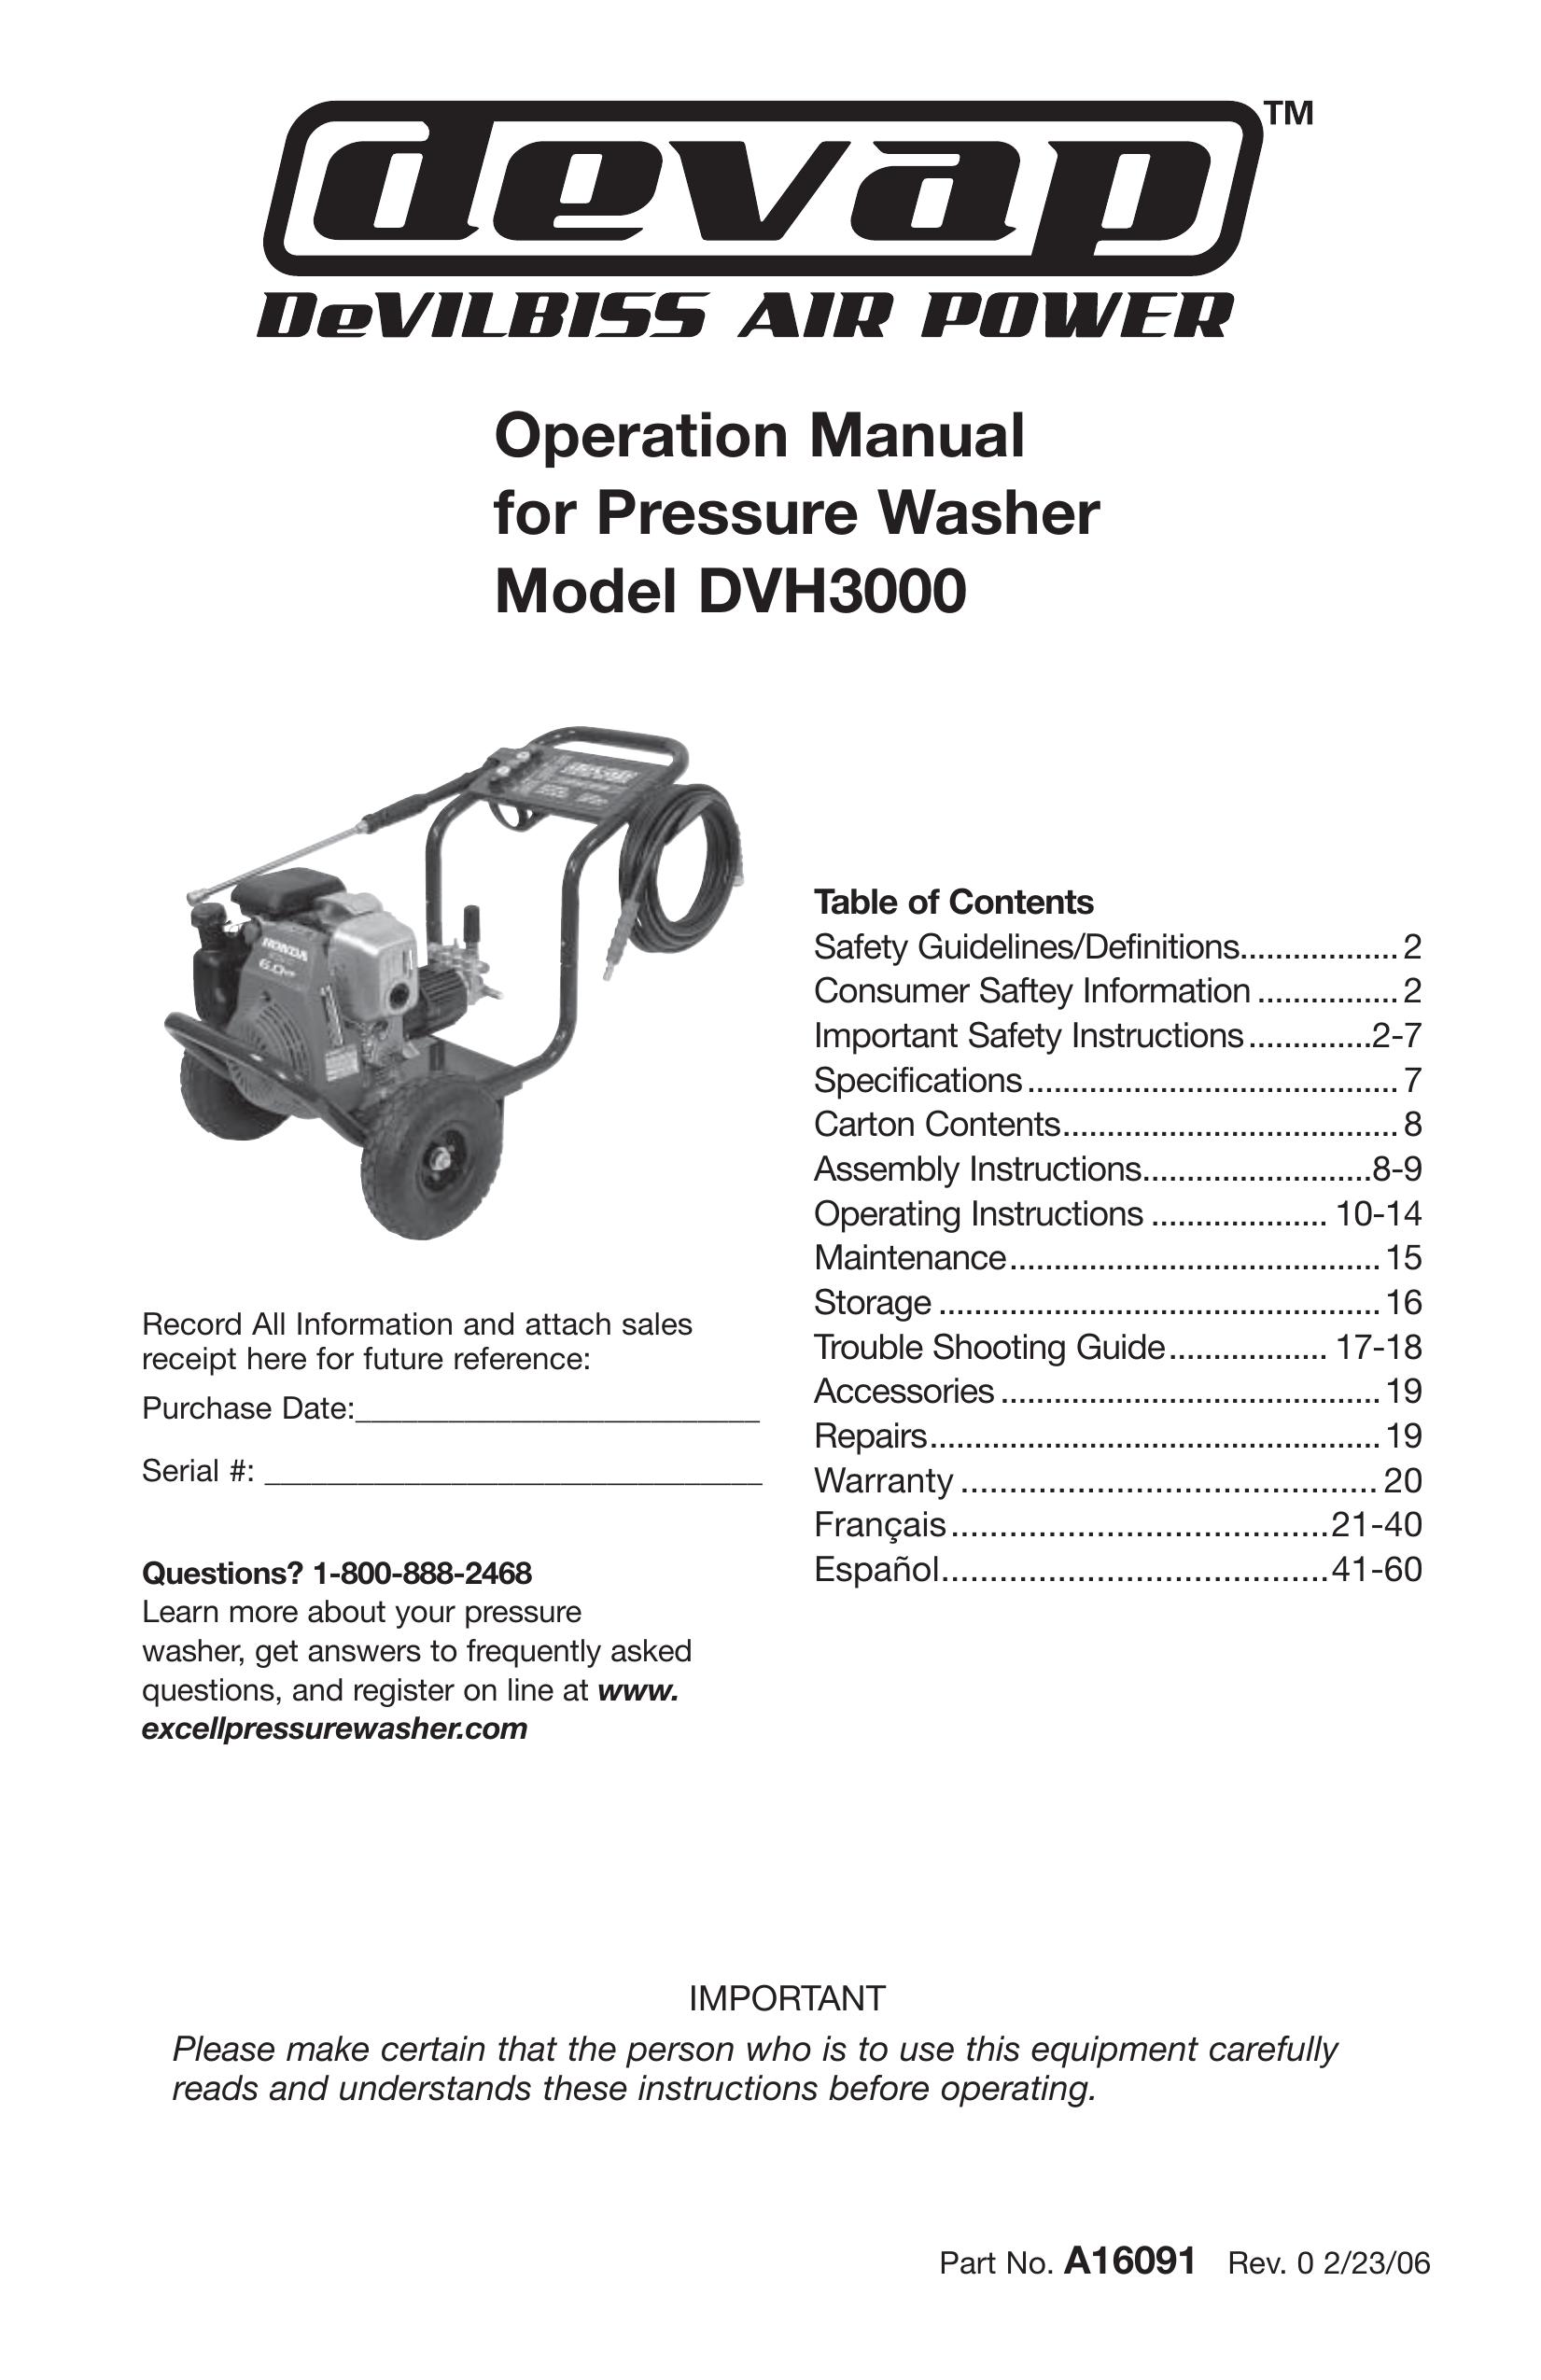 DeVillbiss Air Power Company DVH3000 Pressure Washer User Manual